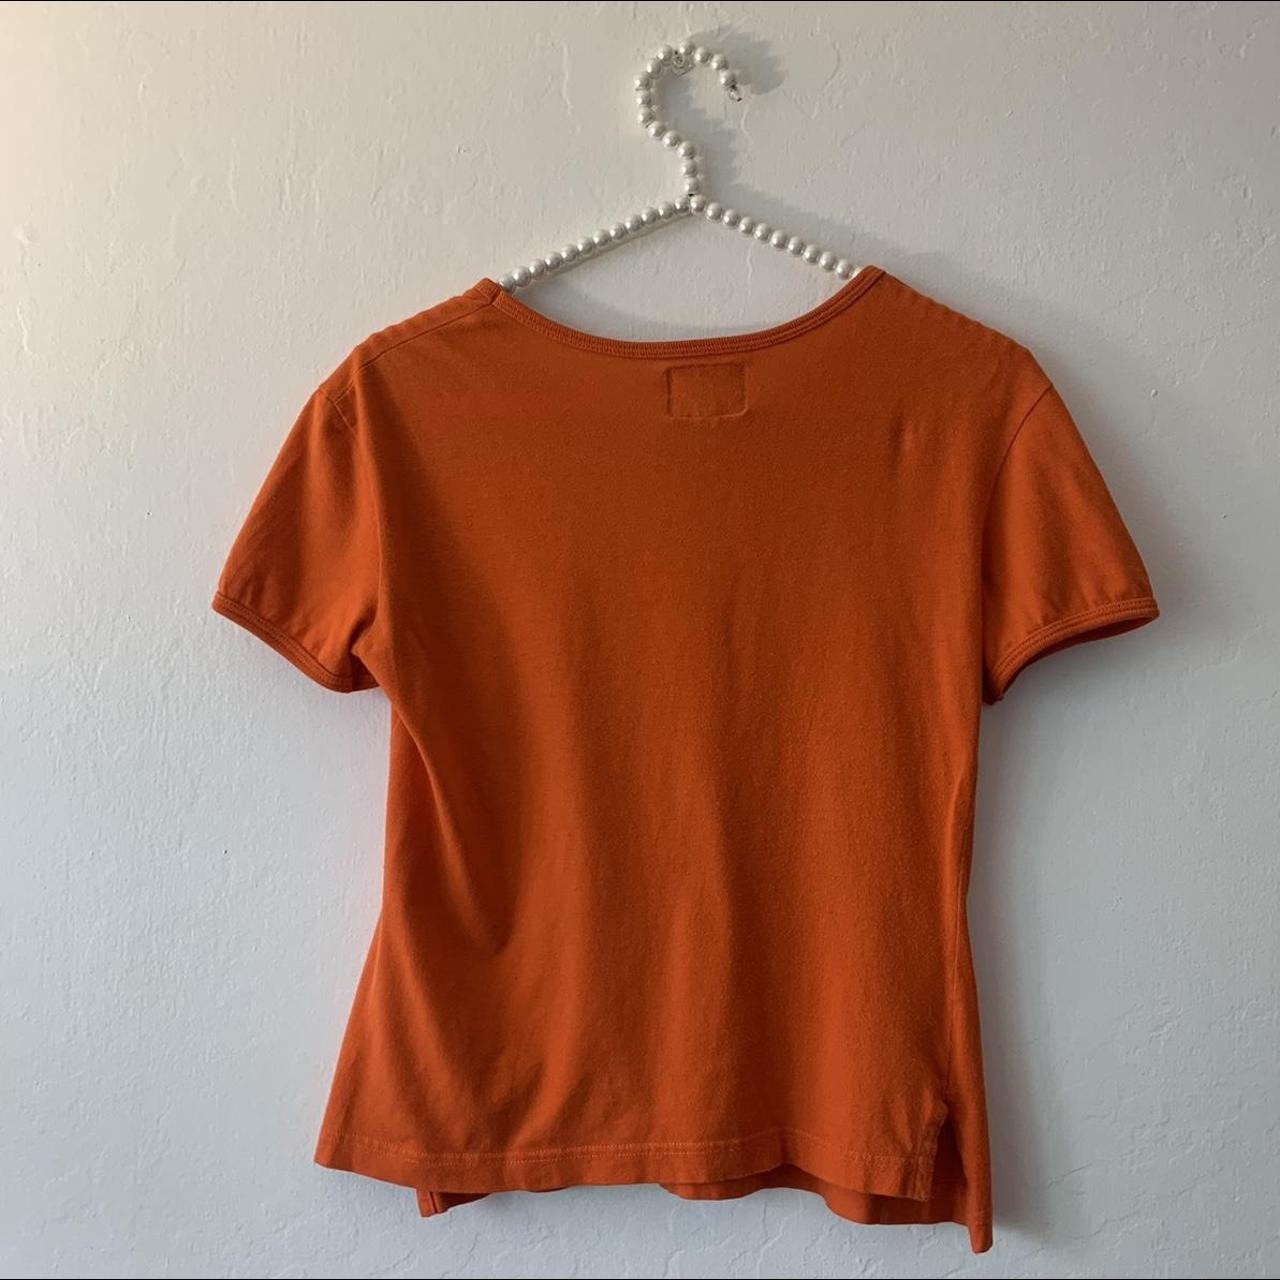 💥 vivienne westwood anglomania orange shirt 💥 small... - Depop